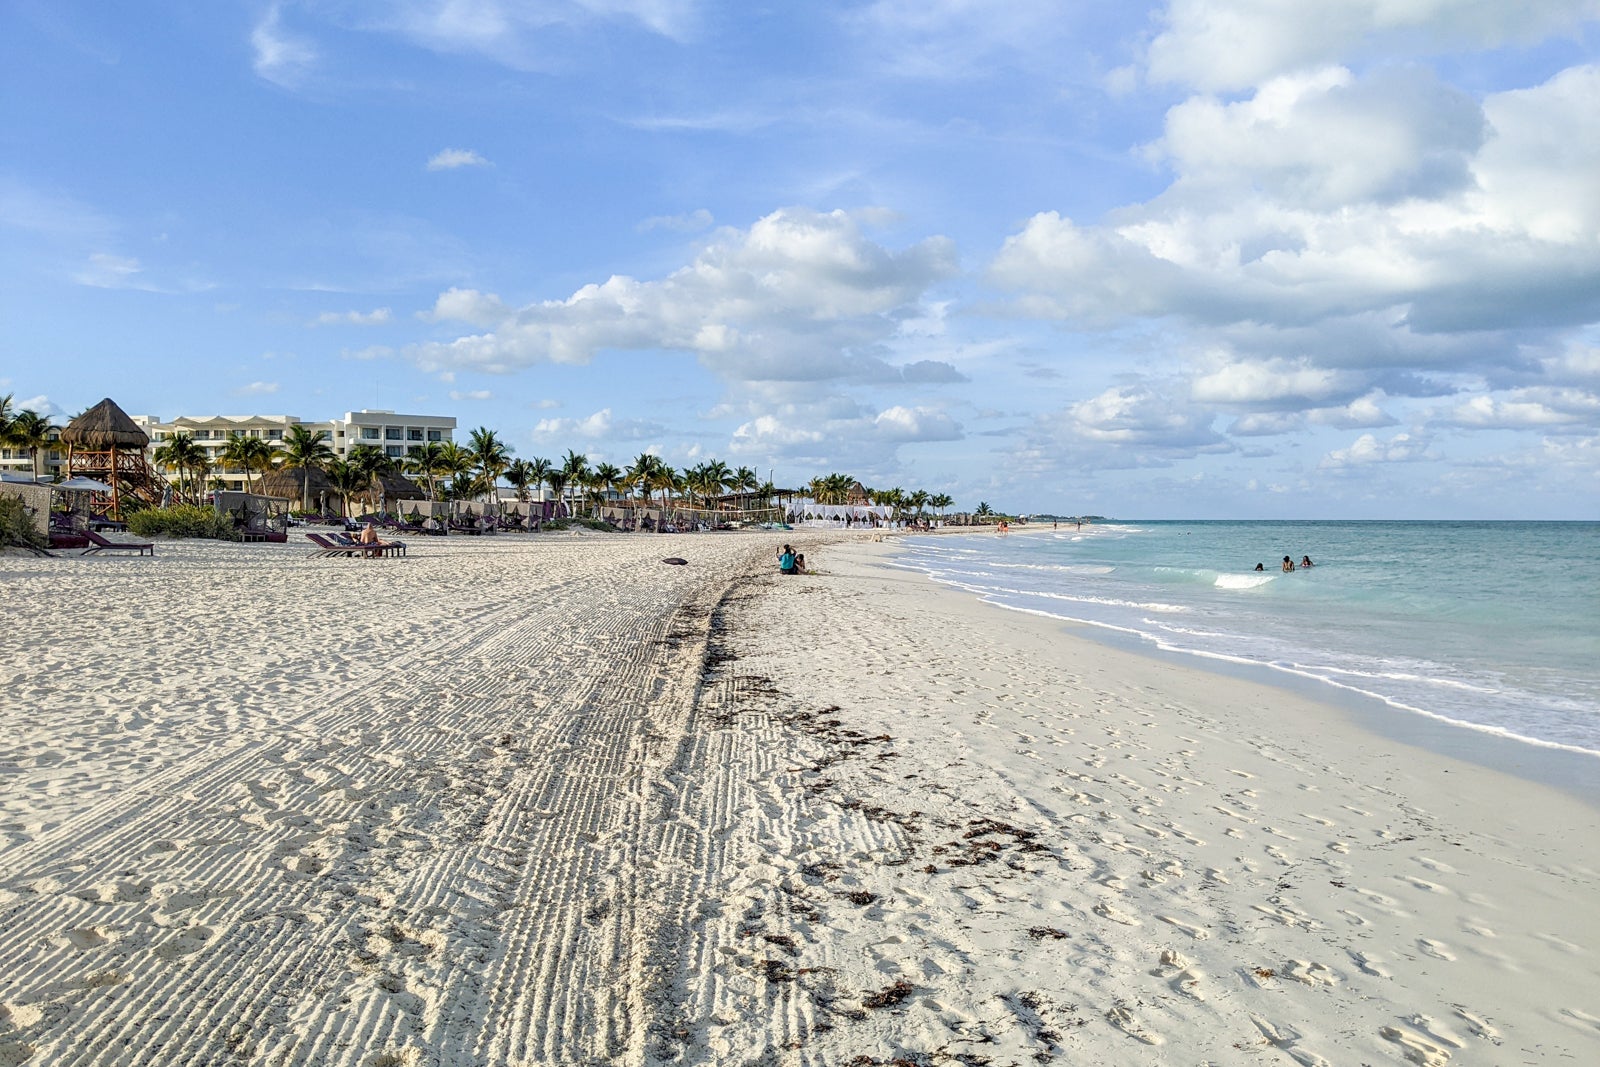 Planet Hollywood Cancun beach